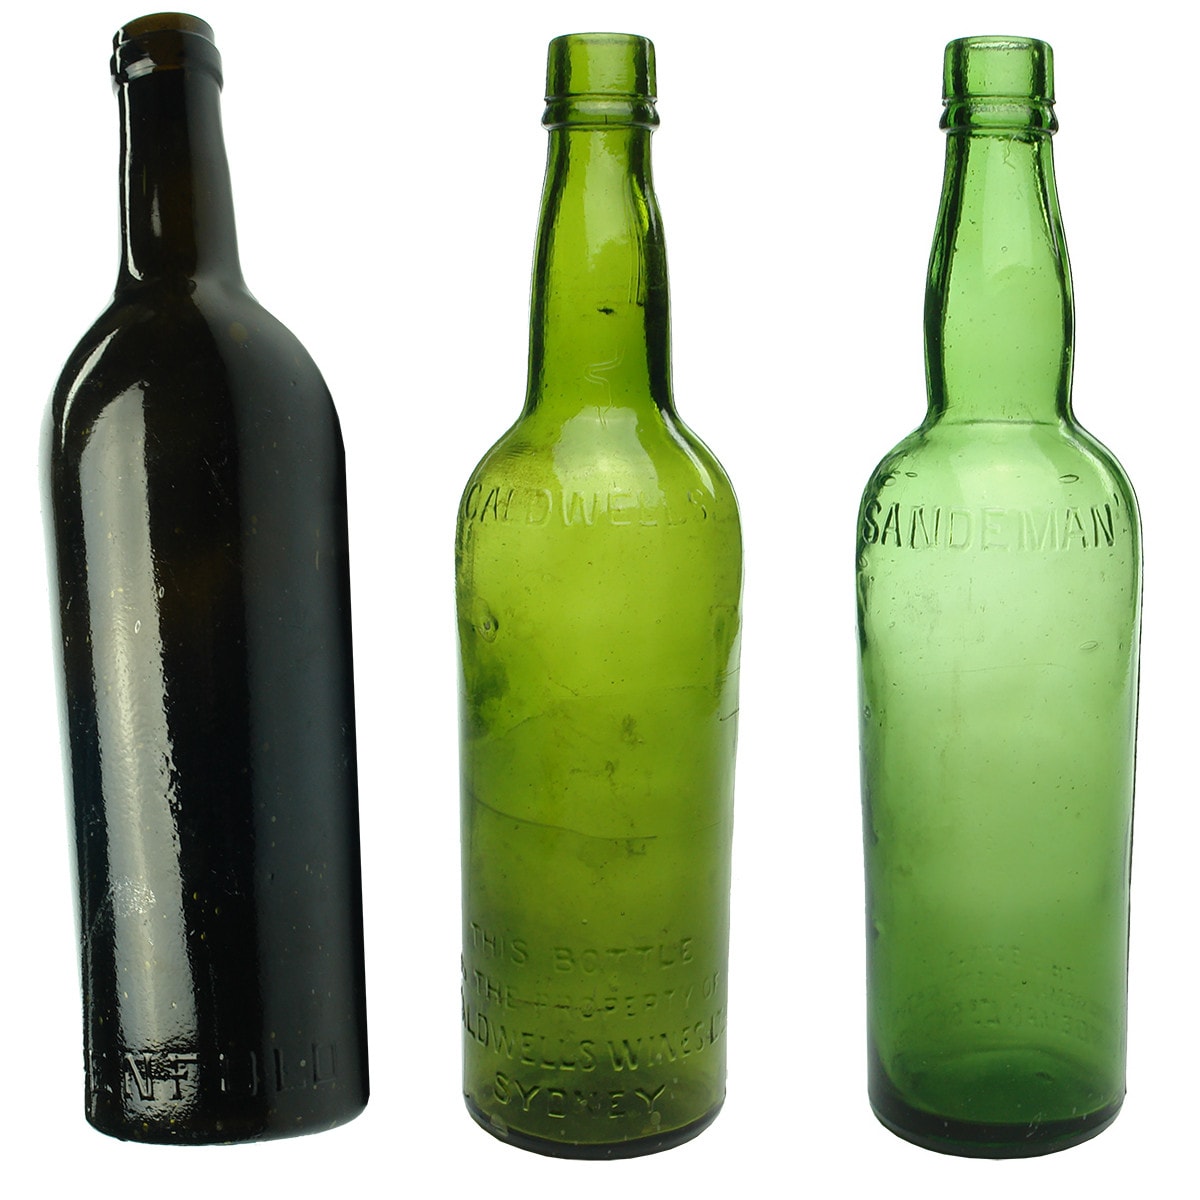 3 Wines: Penfolds Black; Caldwell's Sydney; Sandeman Ltd Sydney. (New South Wales)